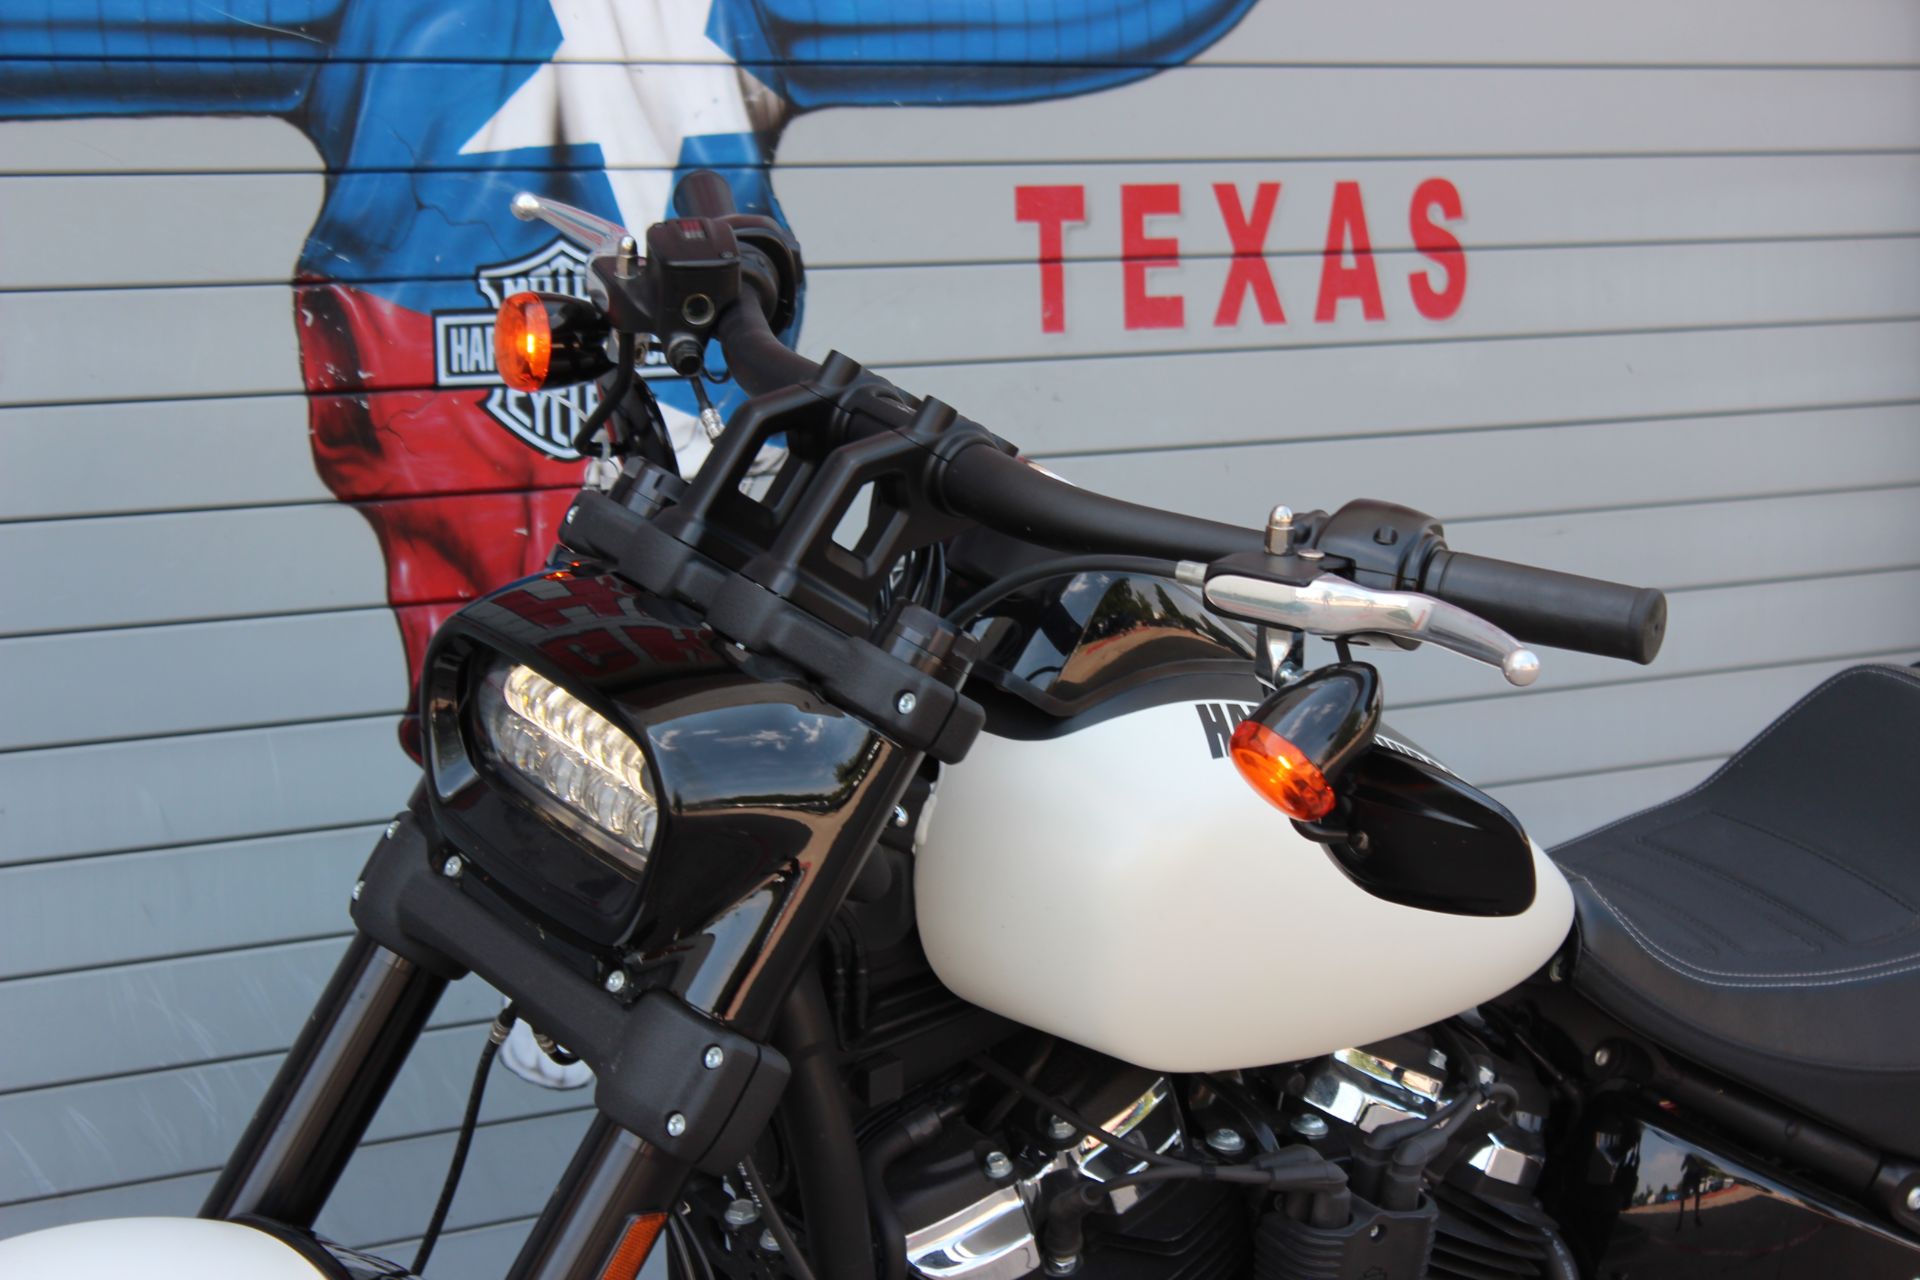 2019 Harley-Davidson Fat Bob® 114 in Grand Prairie, Texas - Photo 15